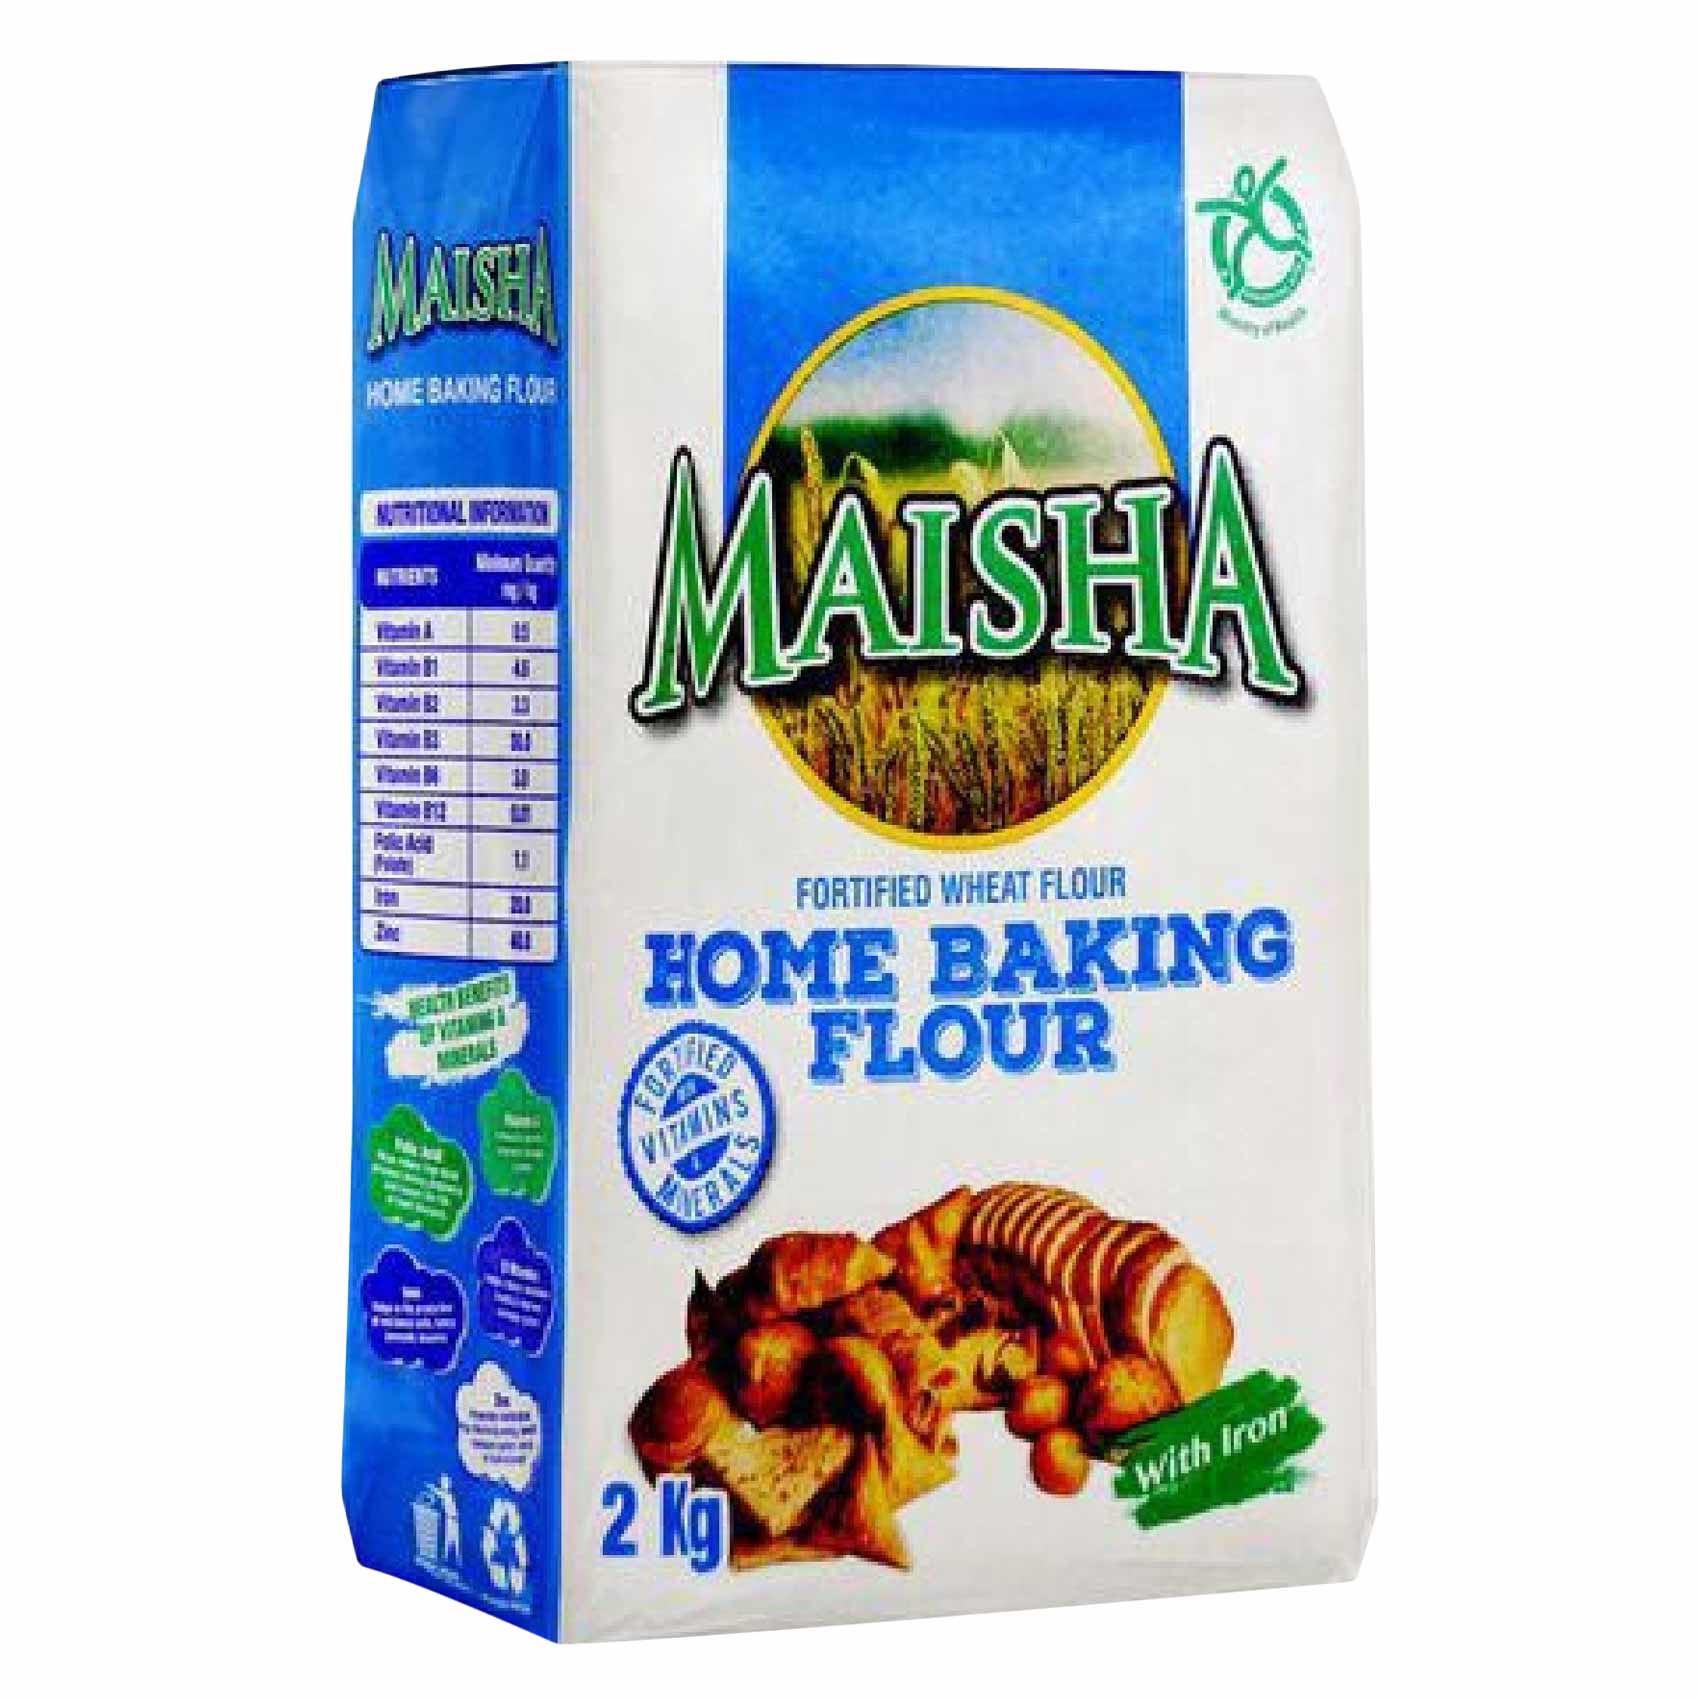 Maisha Home Baking Flour 2kg